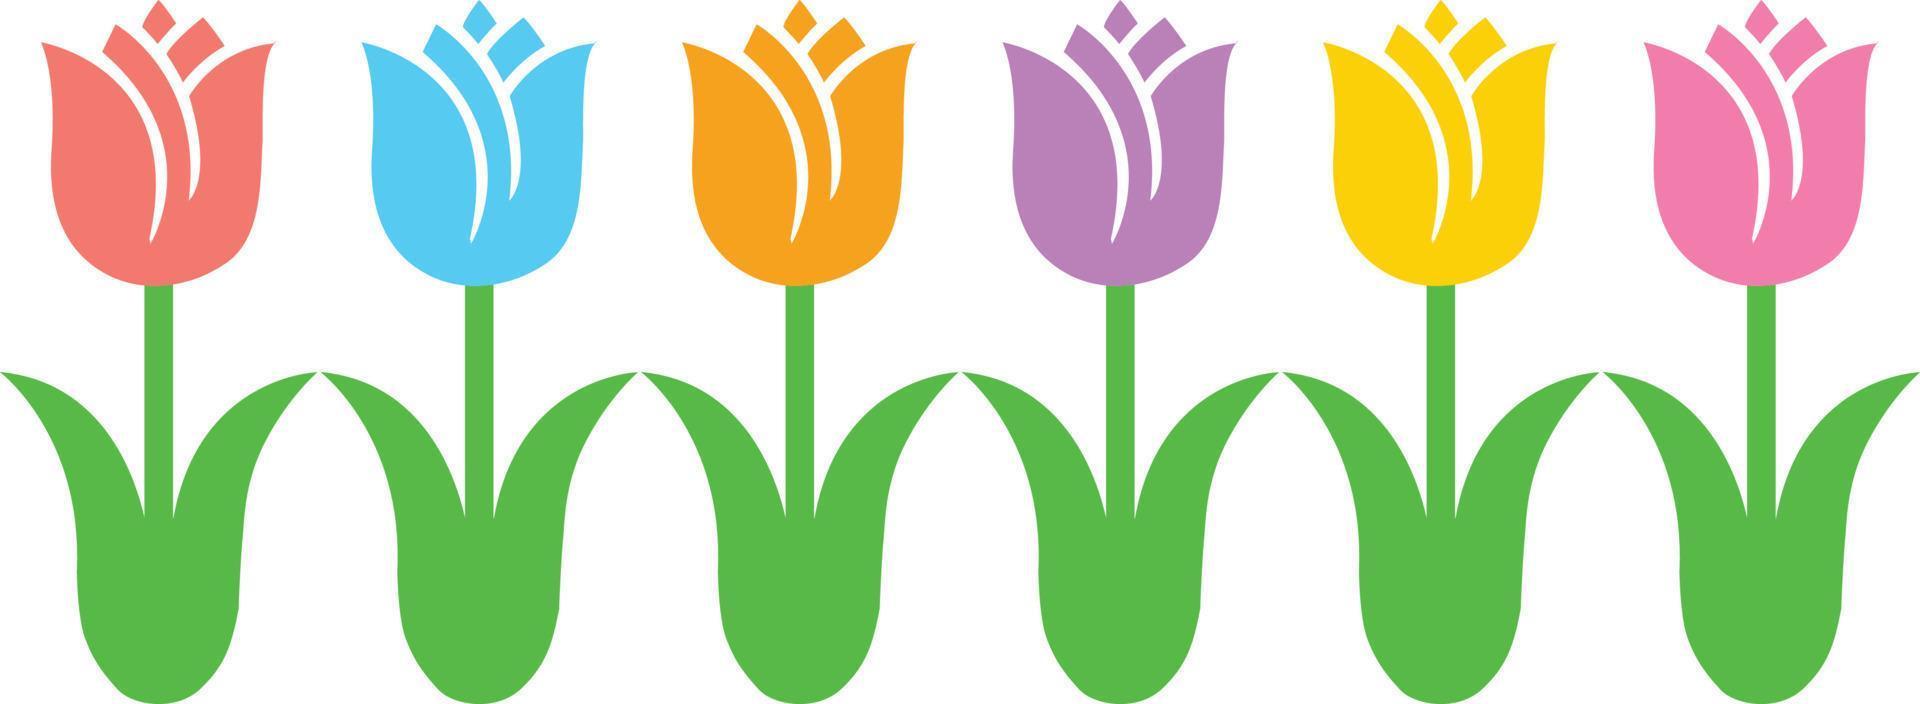 tulpen bloem 2 vector